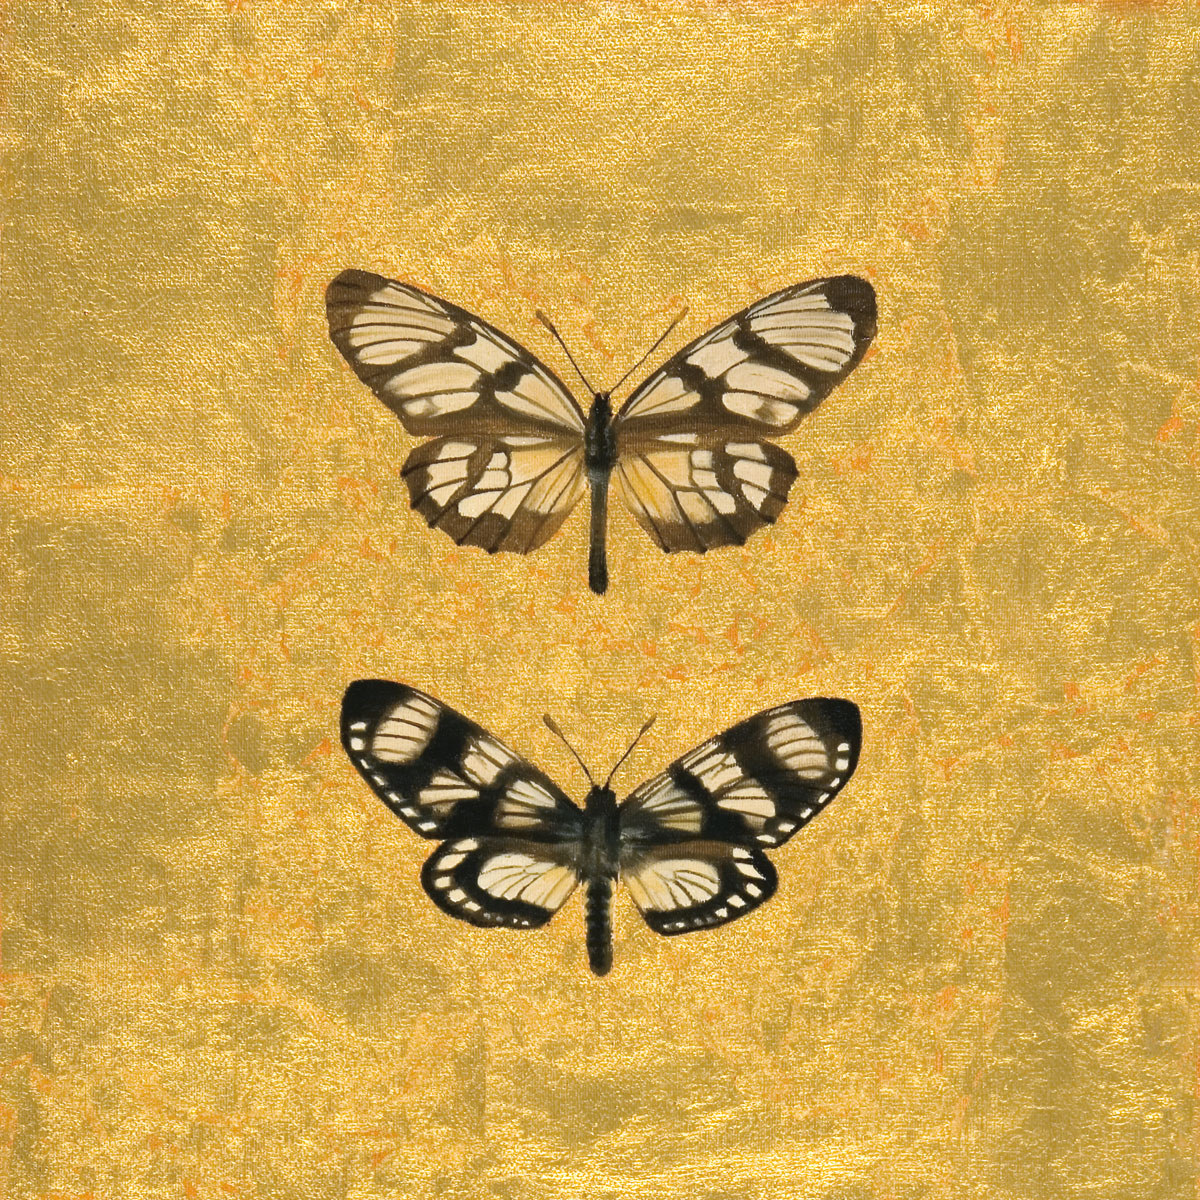 Pair of Butterflies On Gold